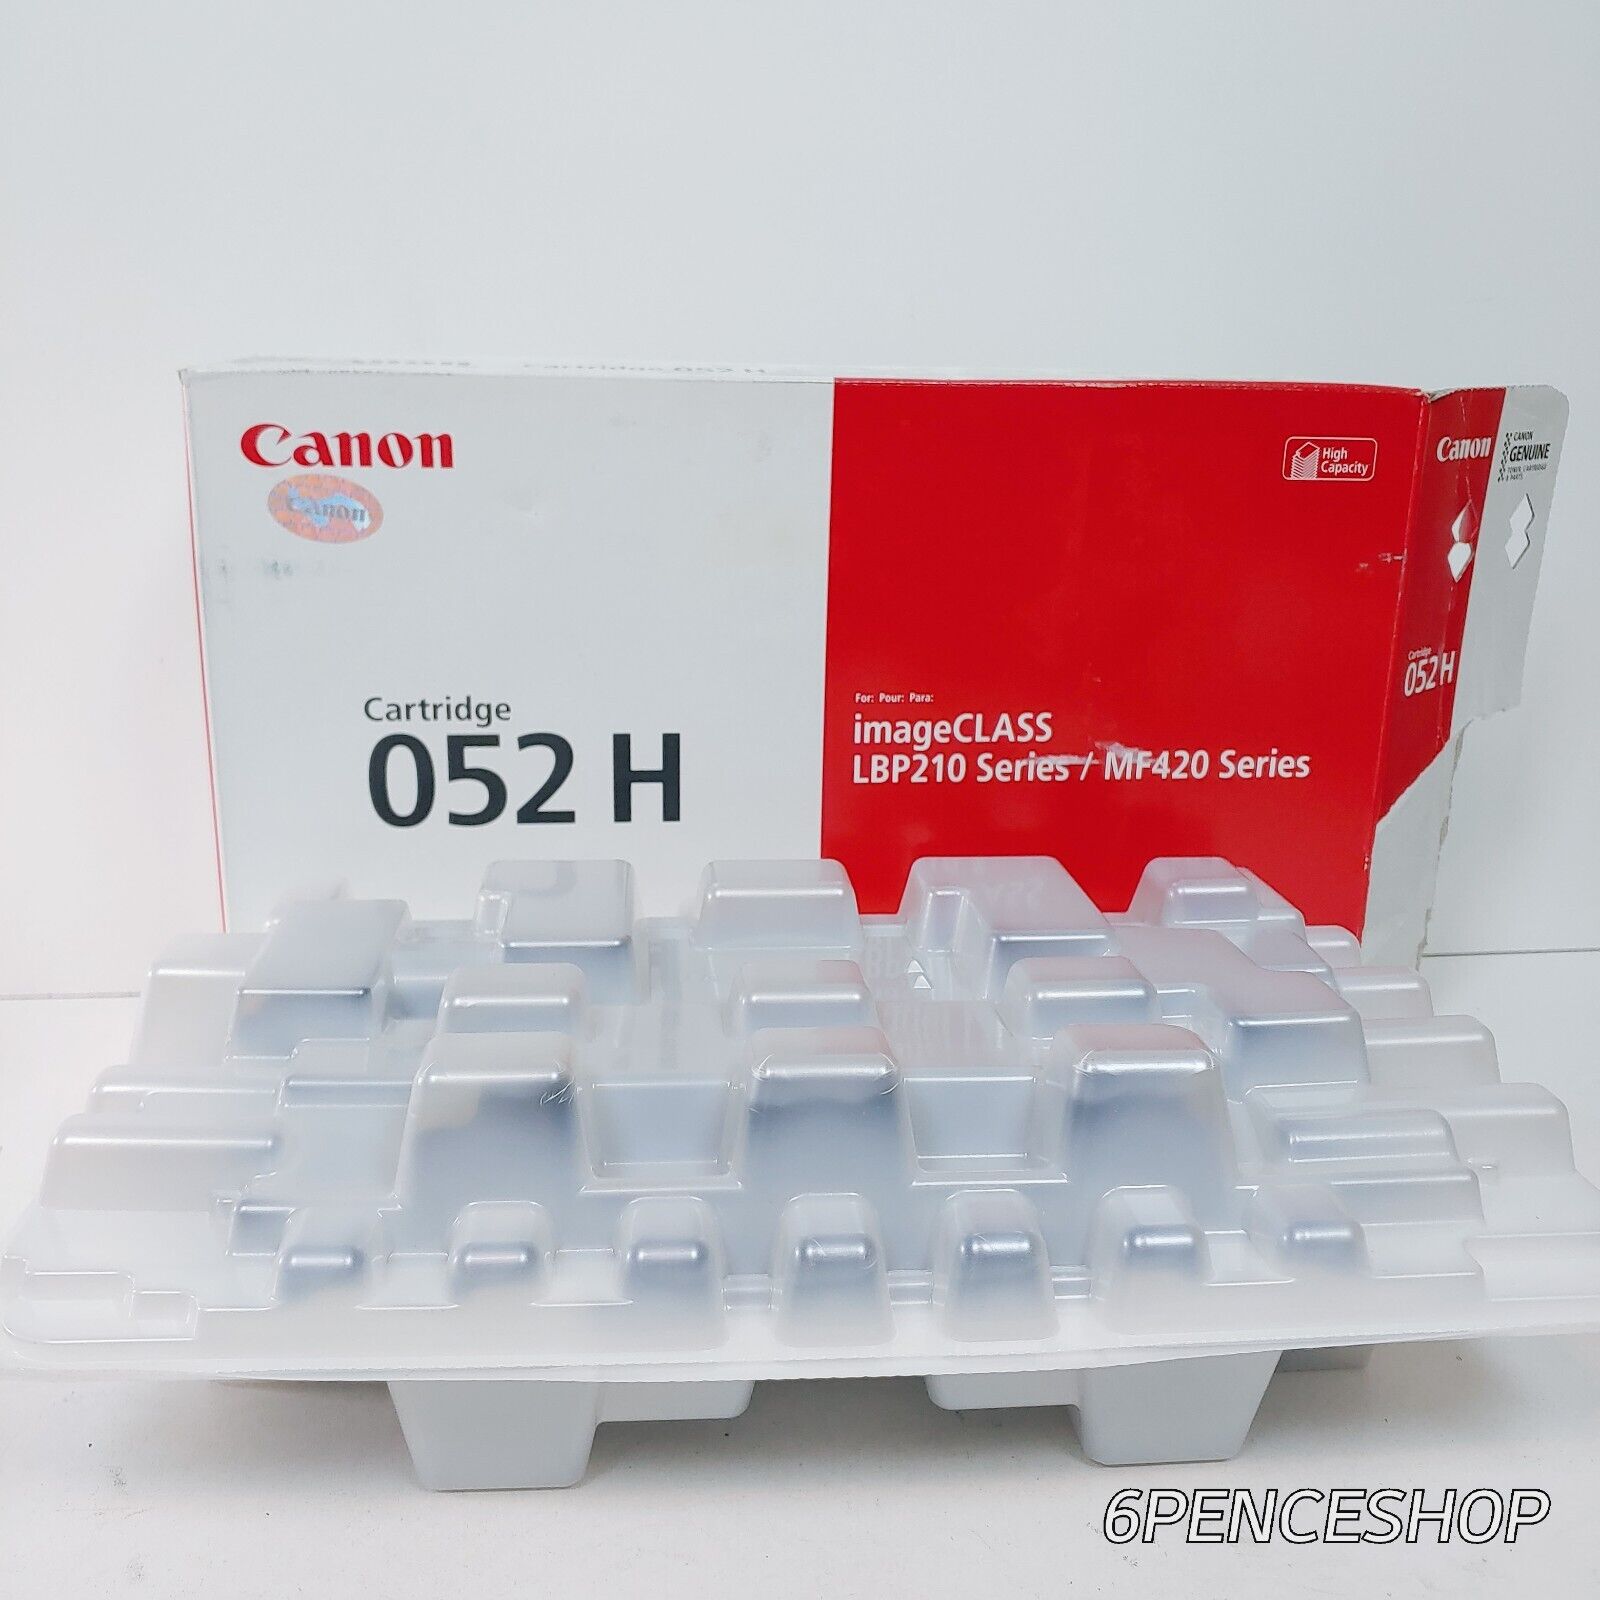 OB CANON 052H Black Toner Cartridge  imageCLASS LBP210 Series